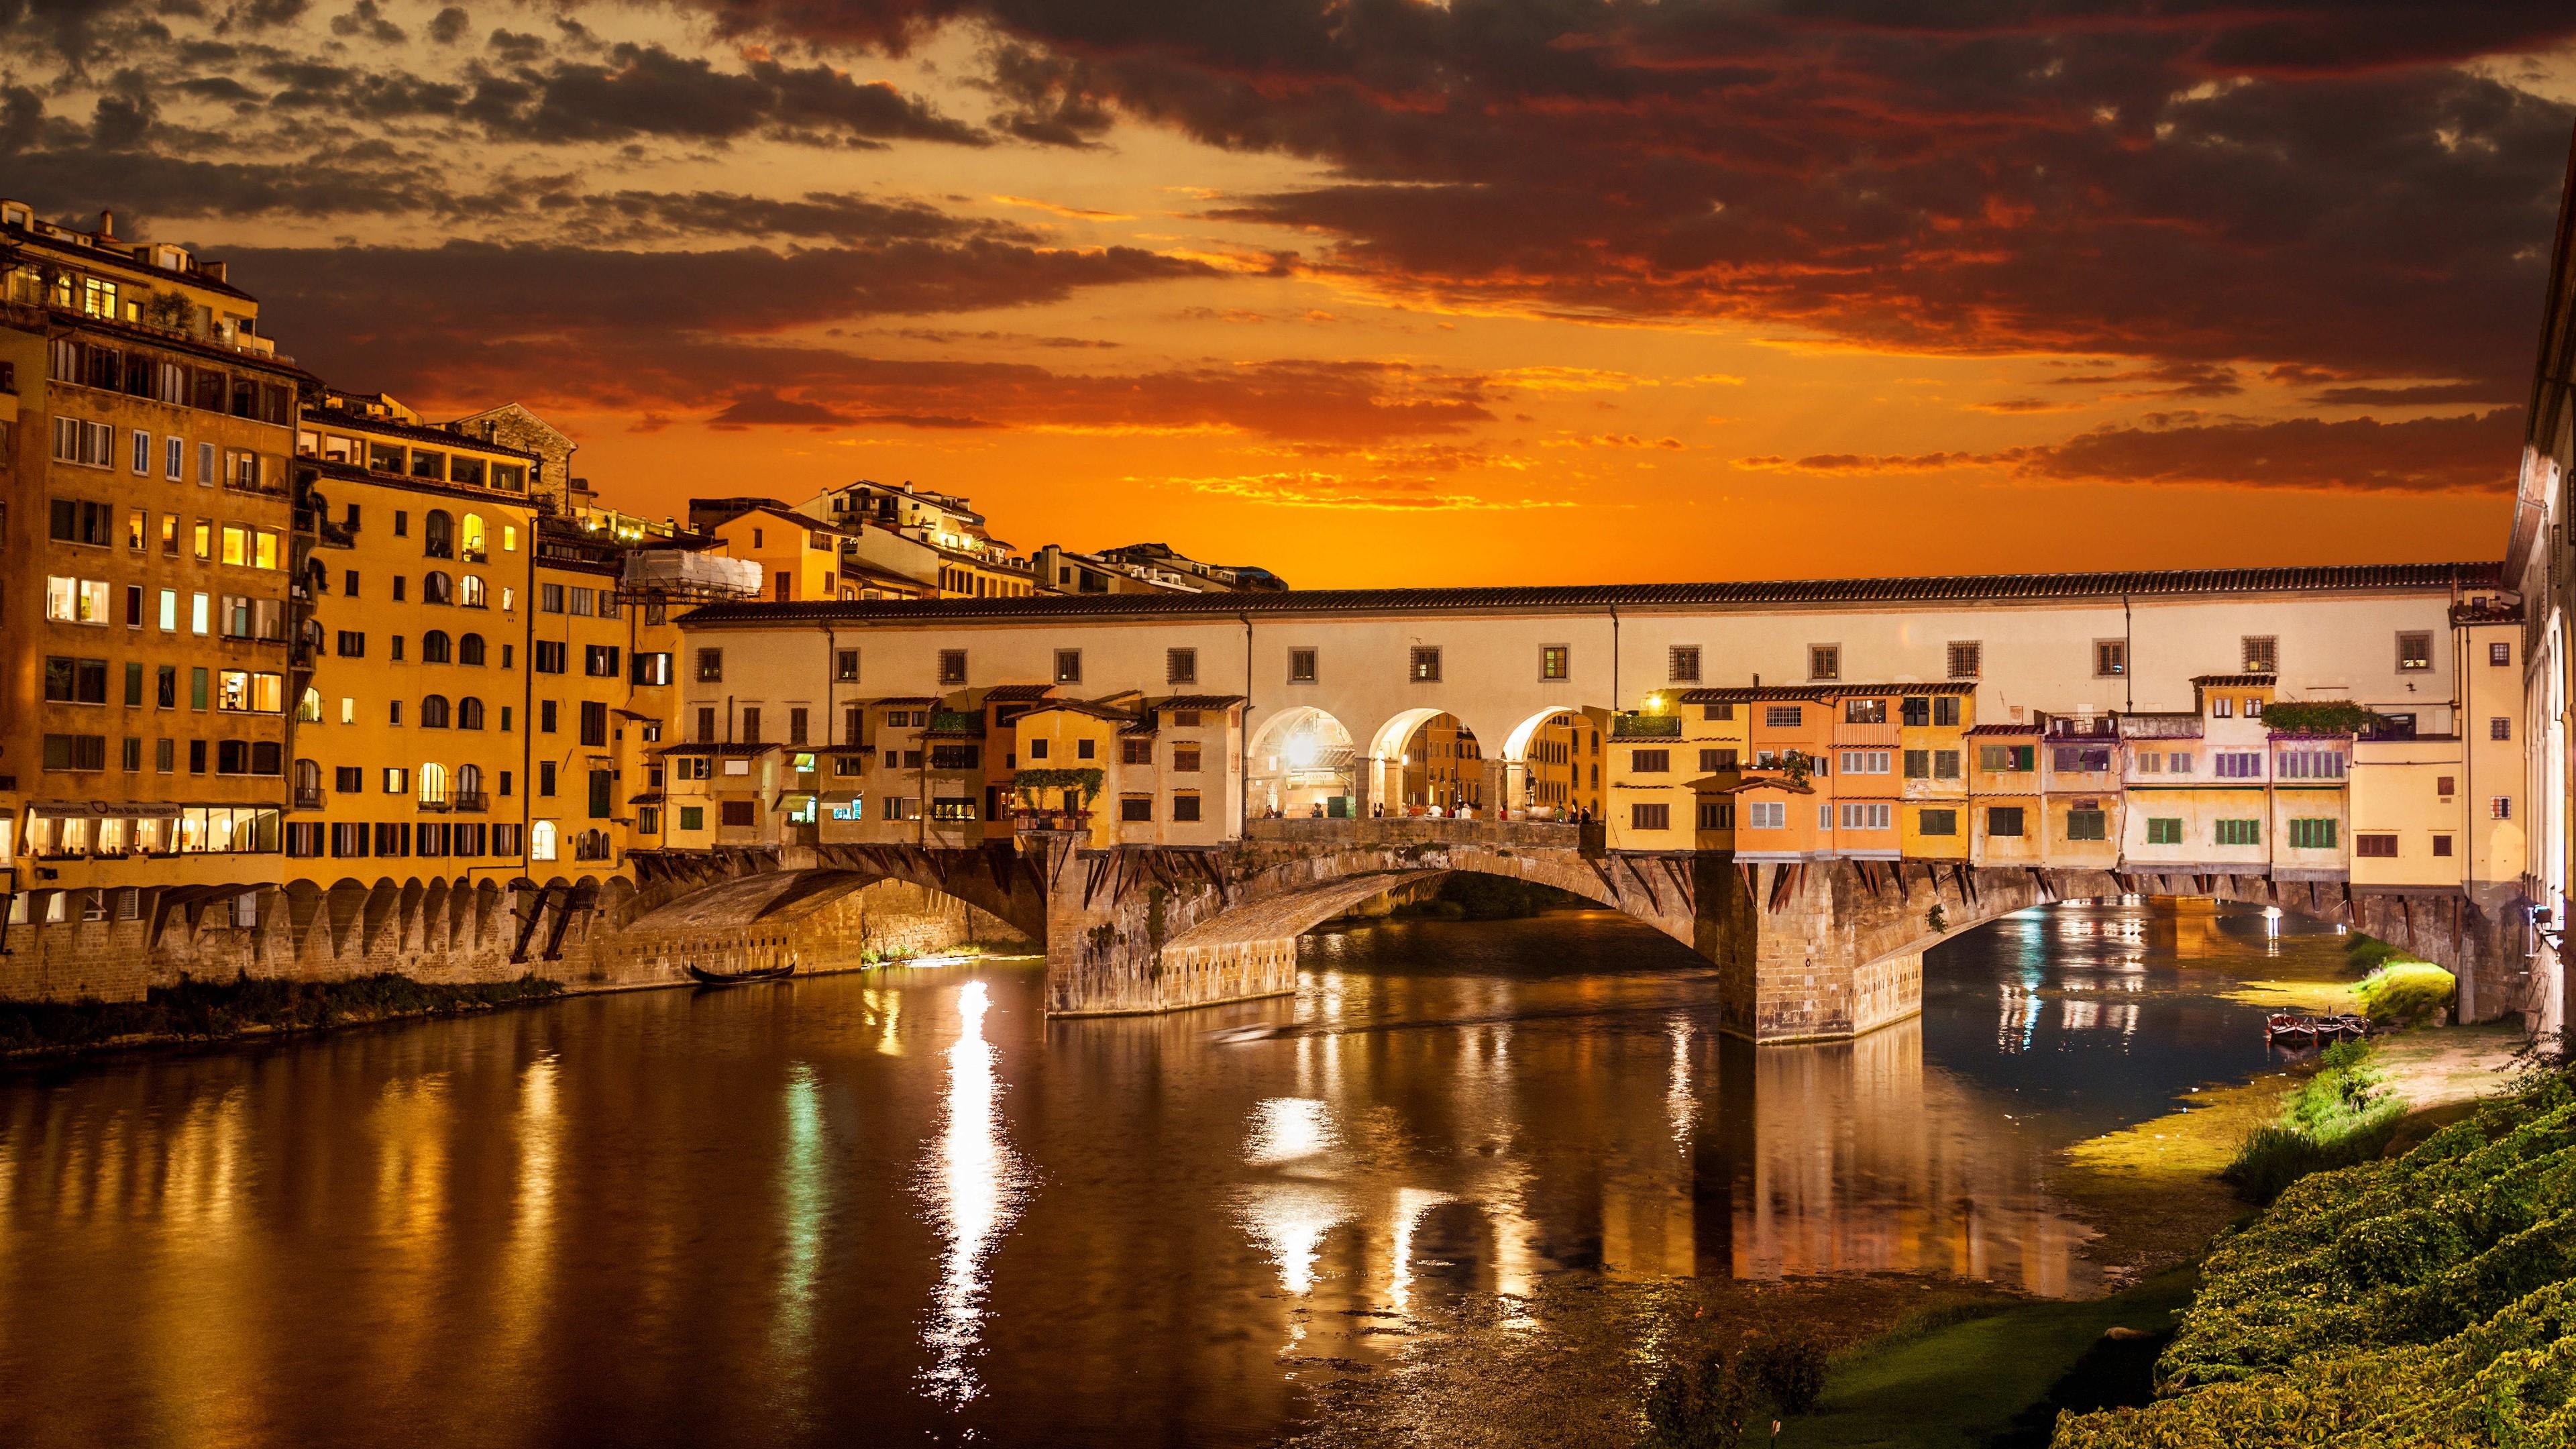 Ponte Vecchio (Old Bridge), Italy Wallpaper. Wallpaper